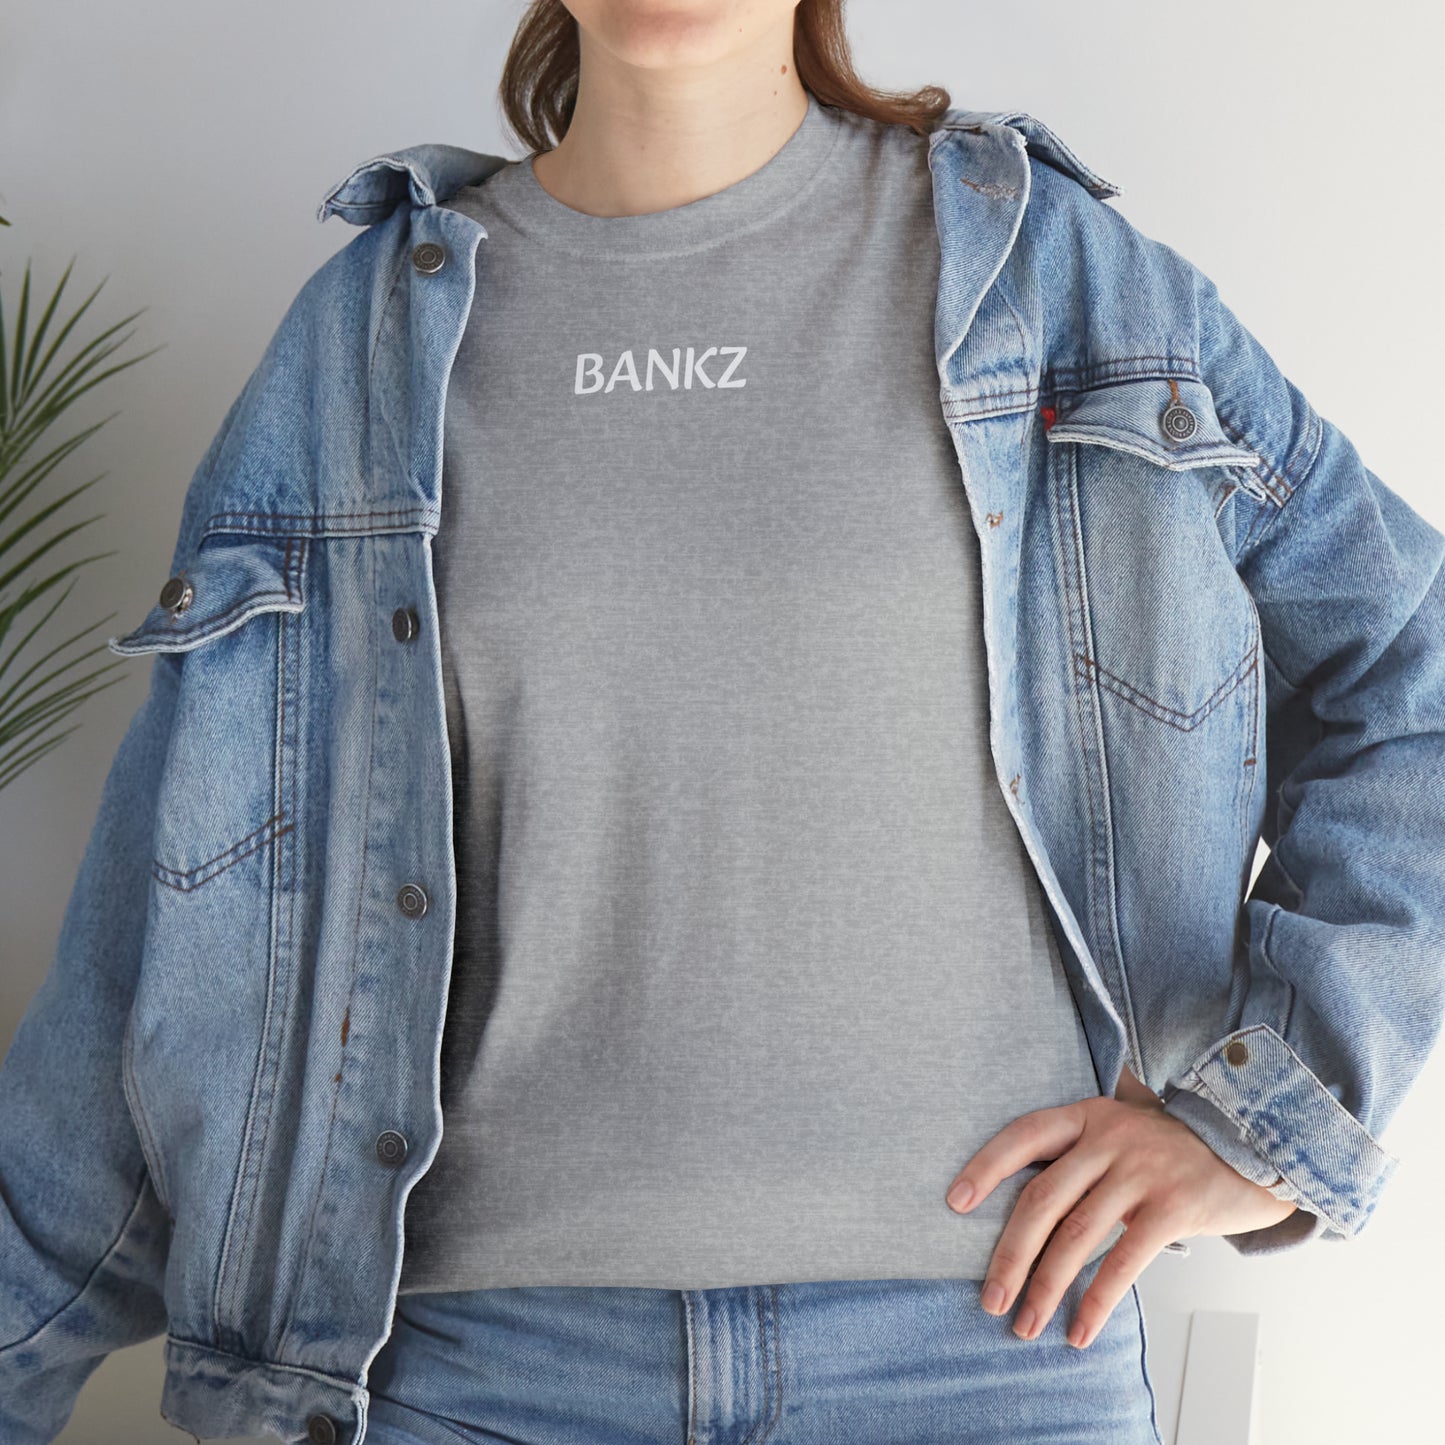 No Money No Funny | Bankz Shirt